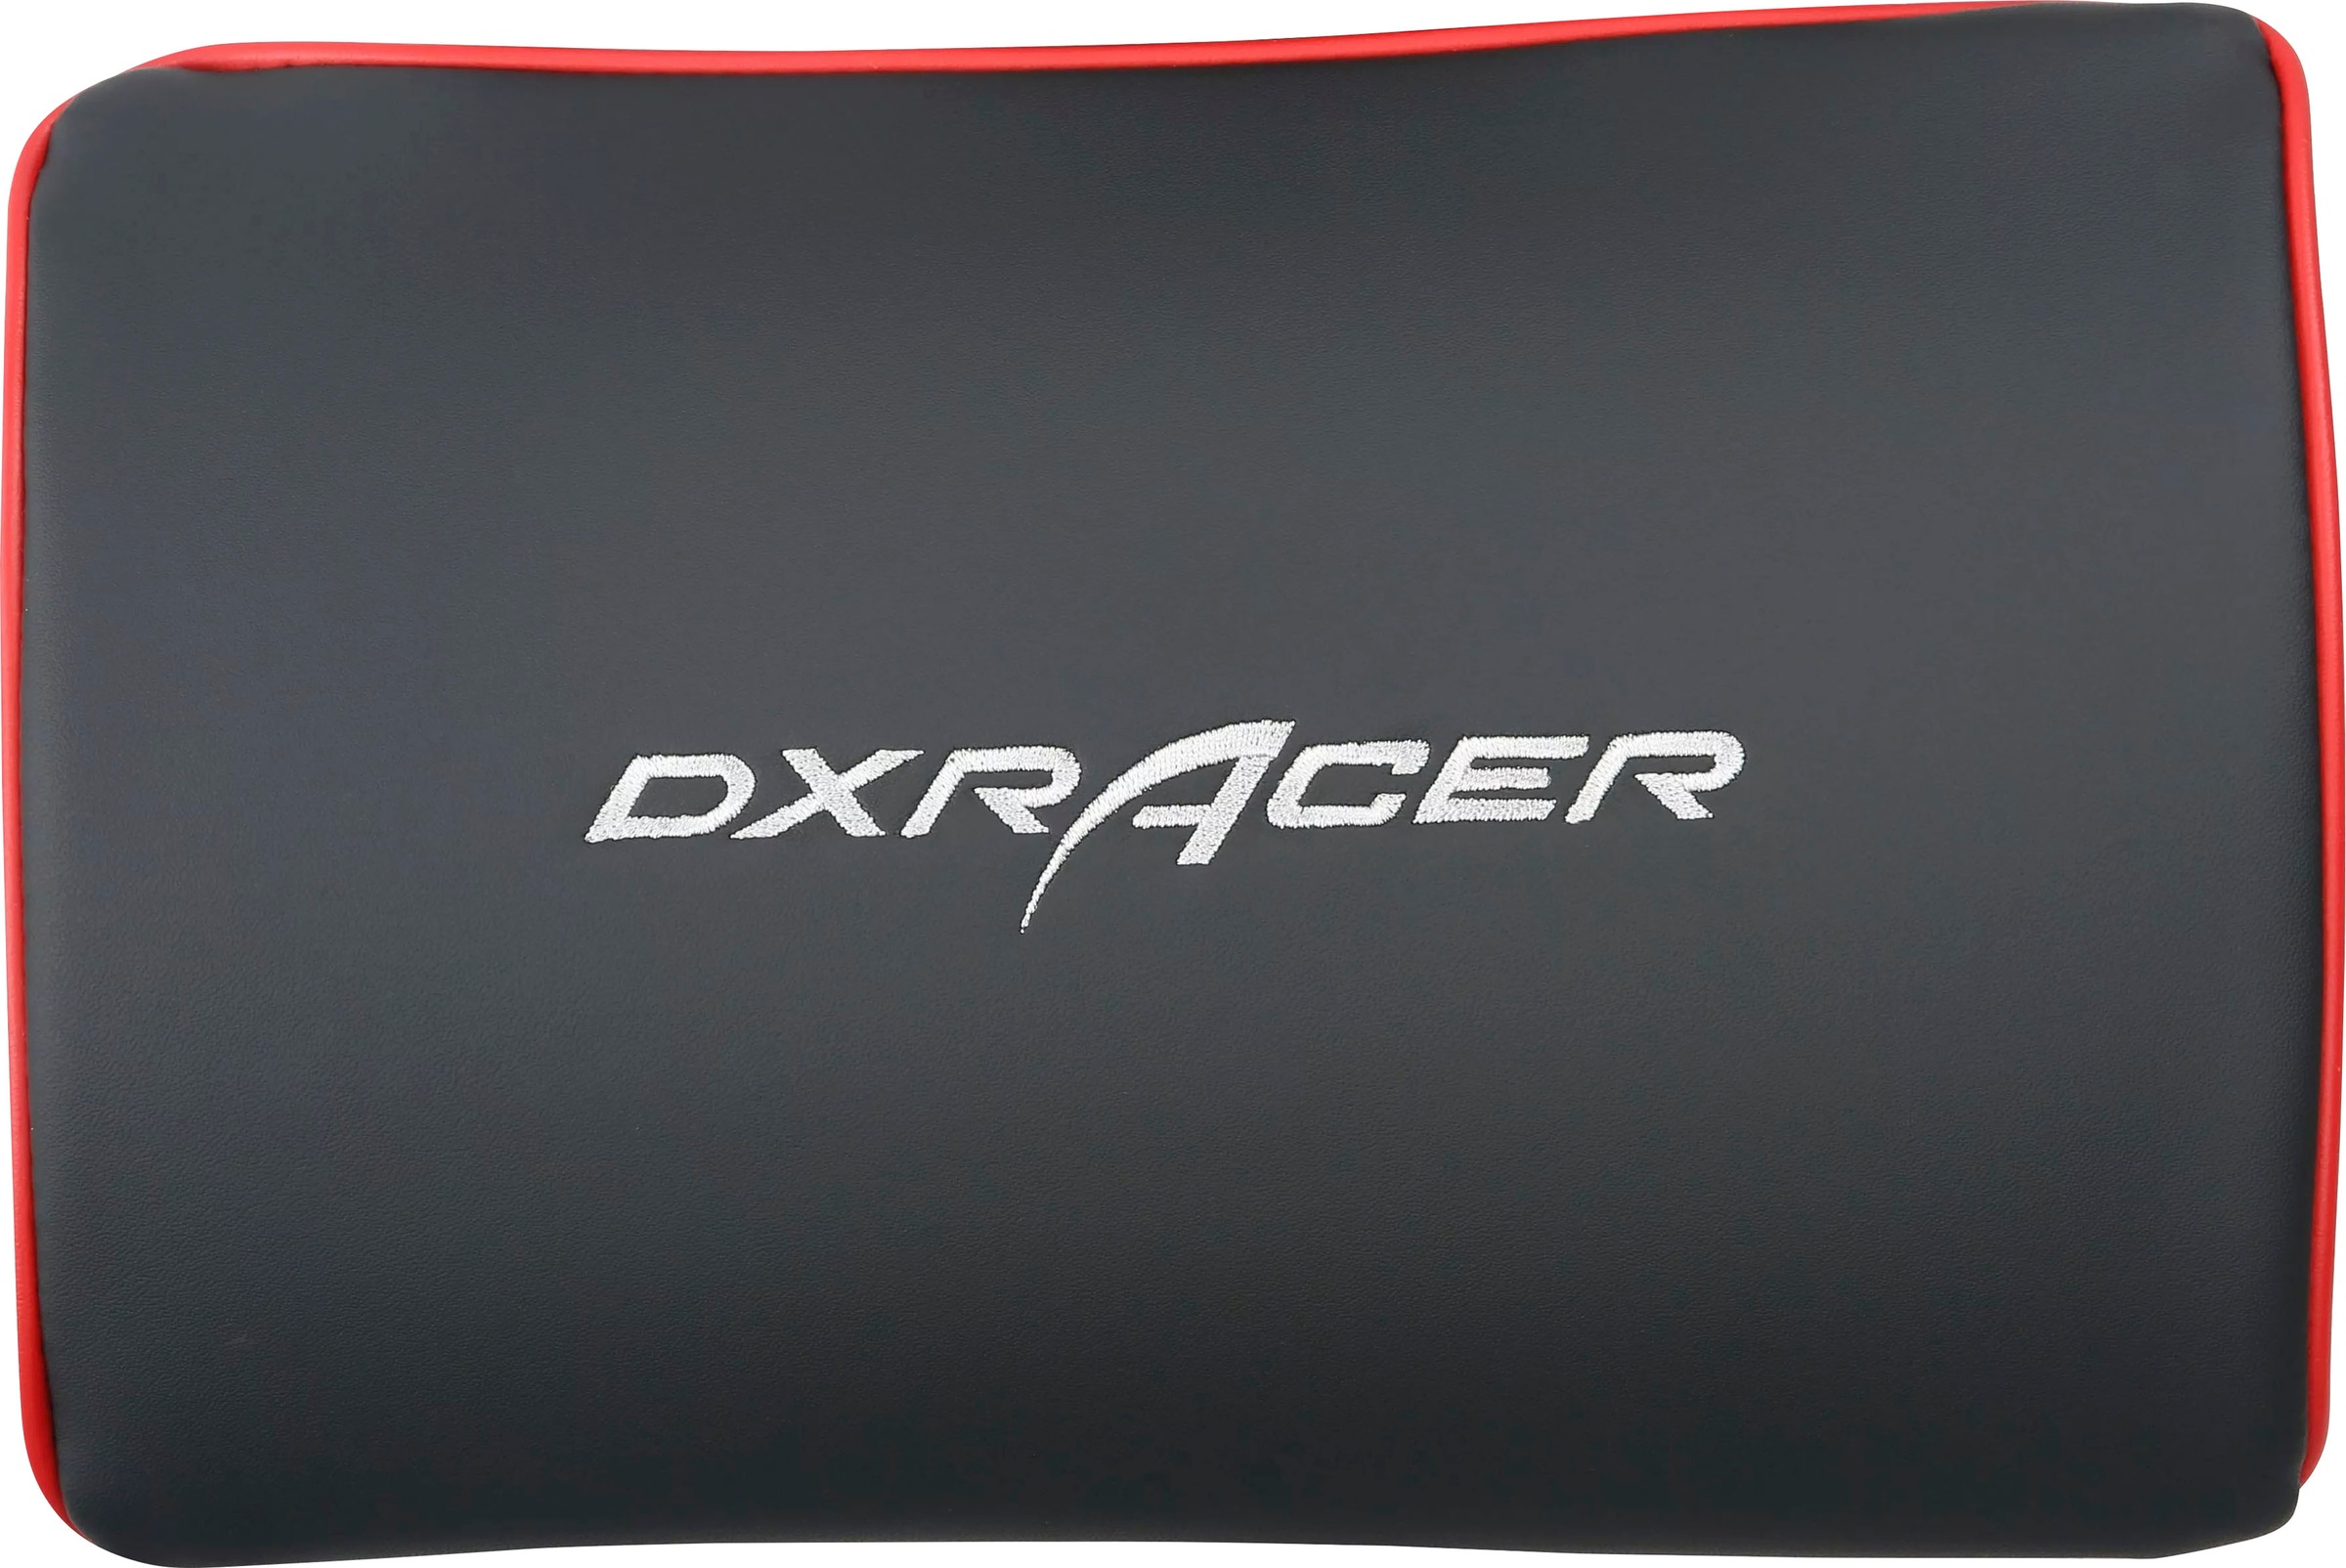 DXRacer USA LLC Mercari, 43% OFF